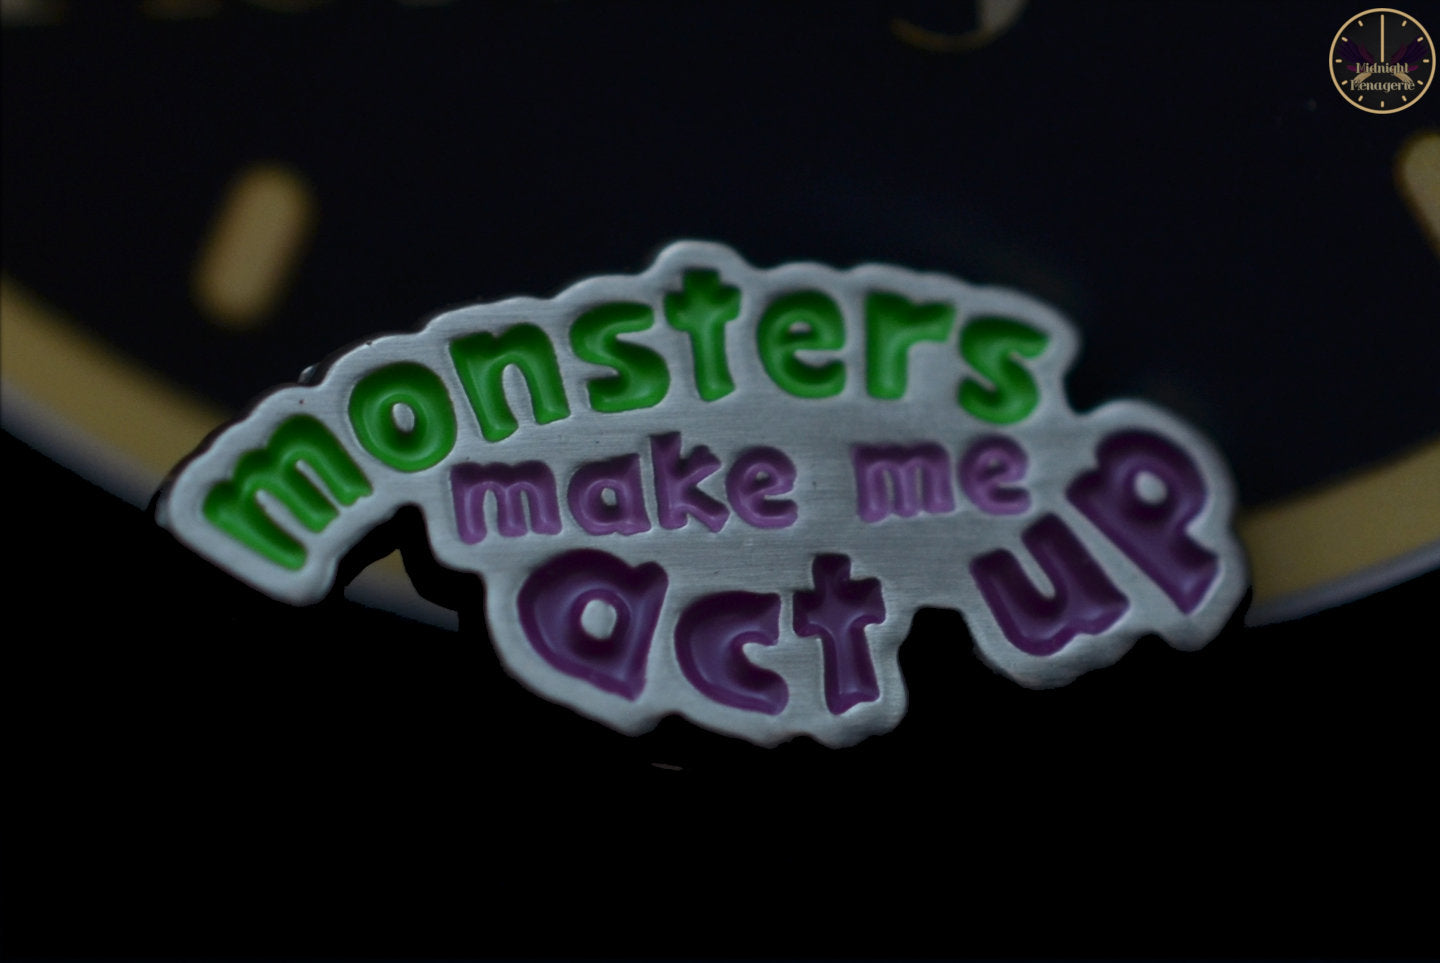 Enamel pin - "Monsters make me act up"